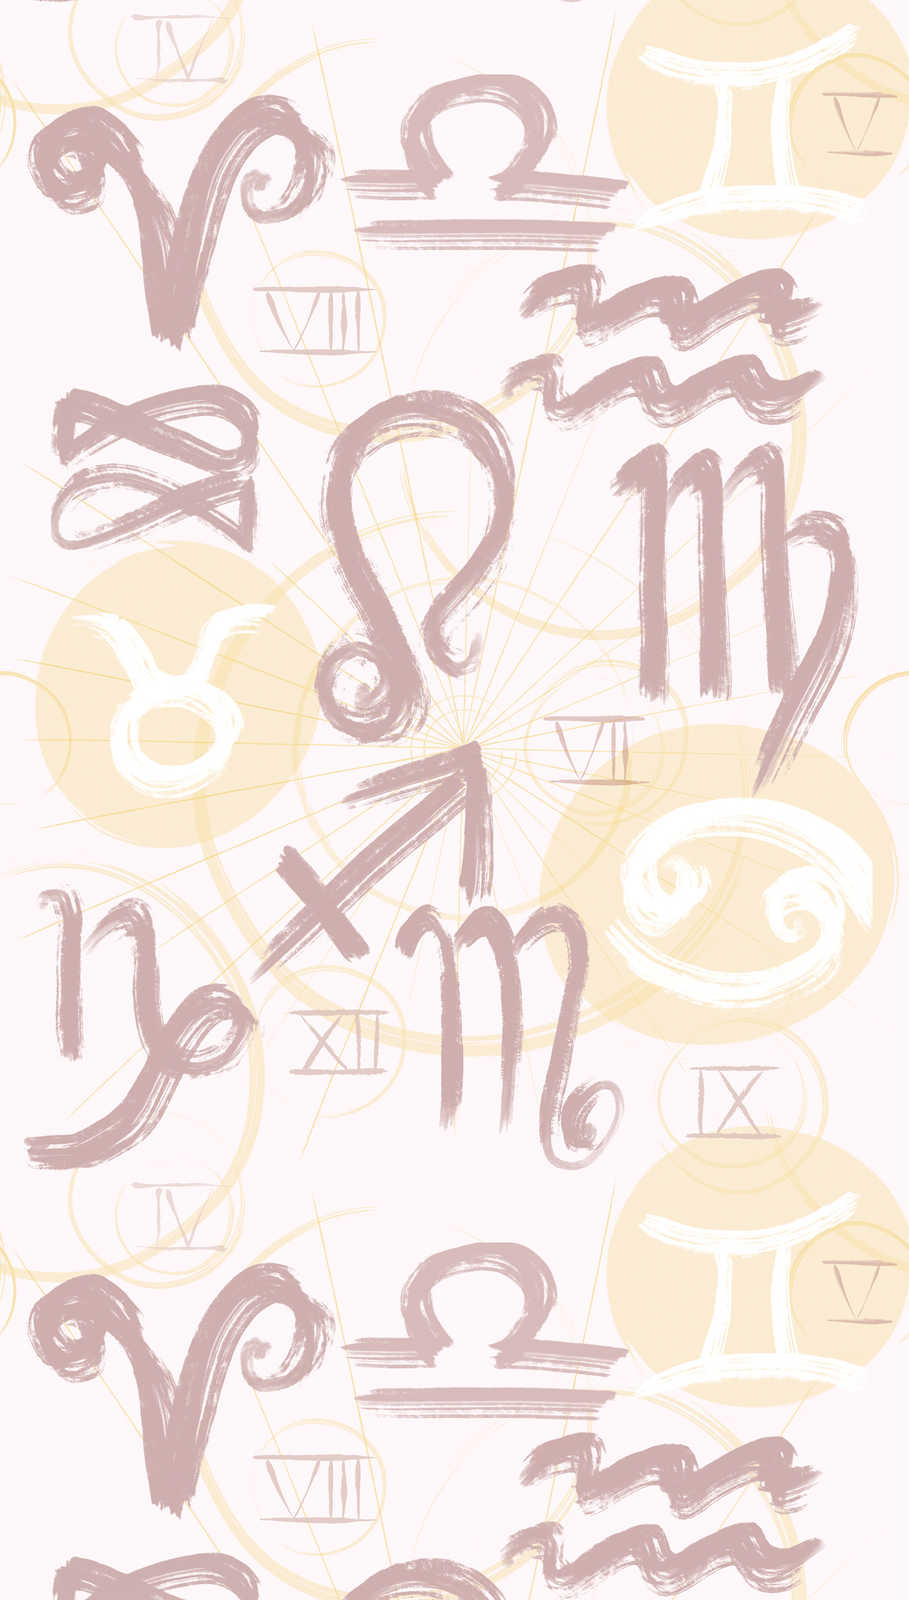             Wallpaper with zodiac symbols and Roman numerals - cream, yellow, pink
        